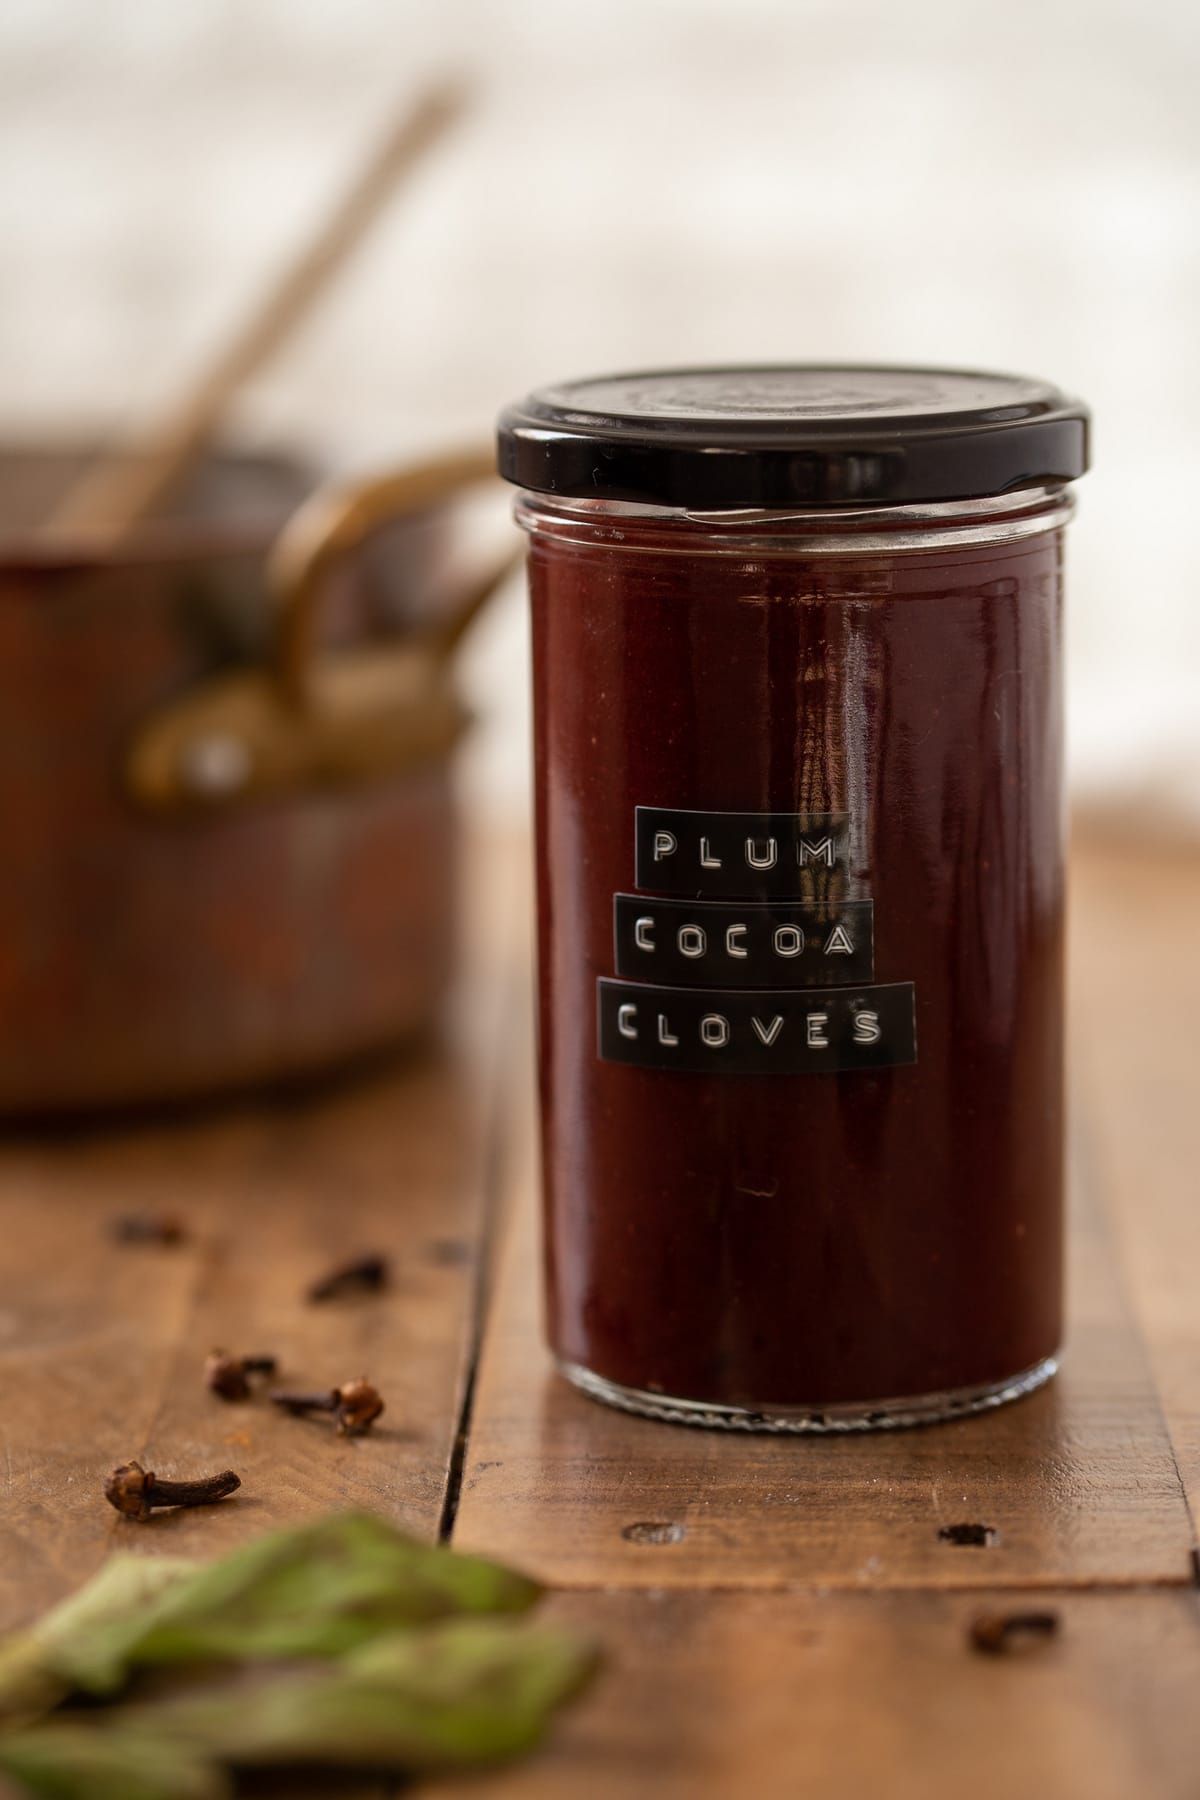 A plum clove cocoa jam in a labelled jar.